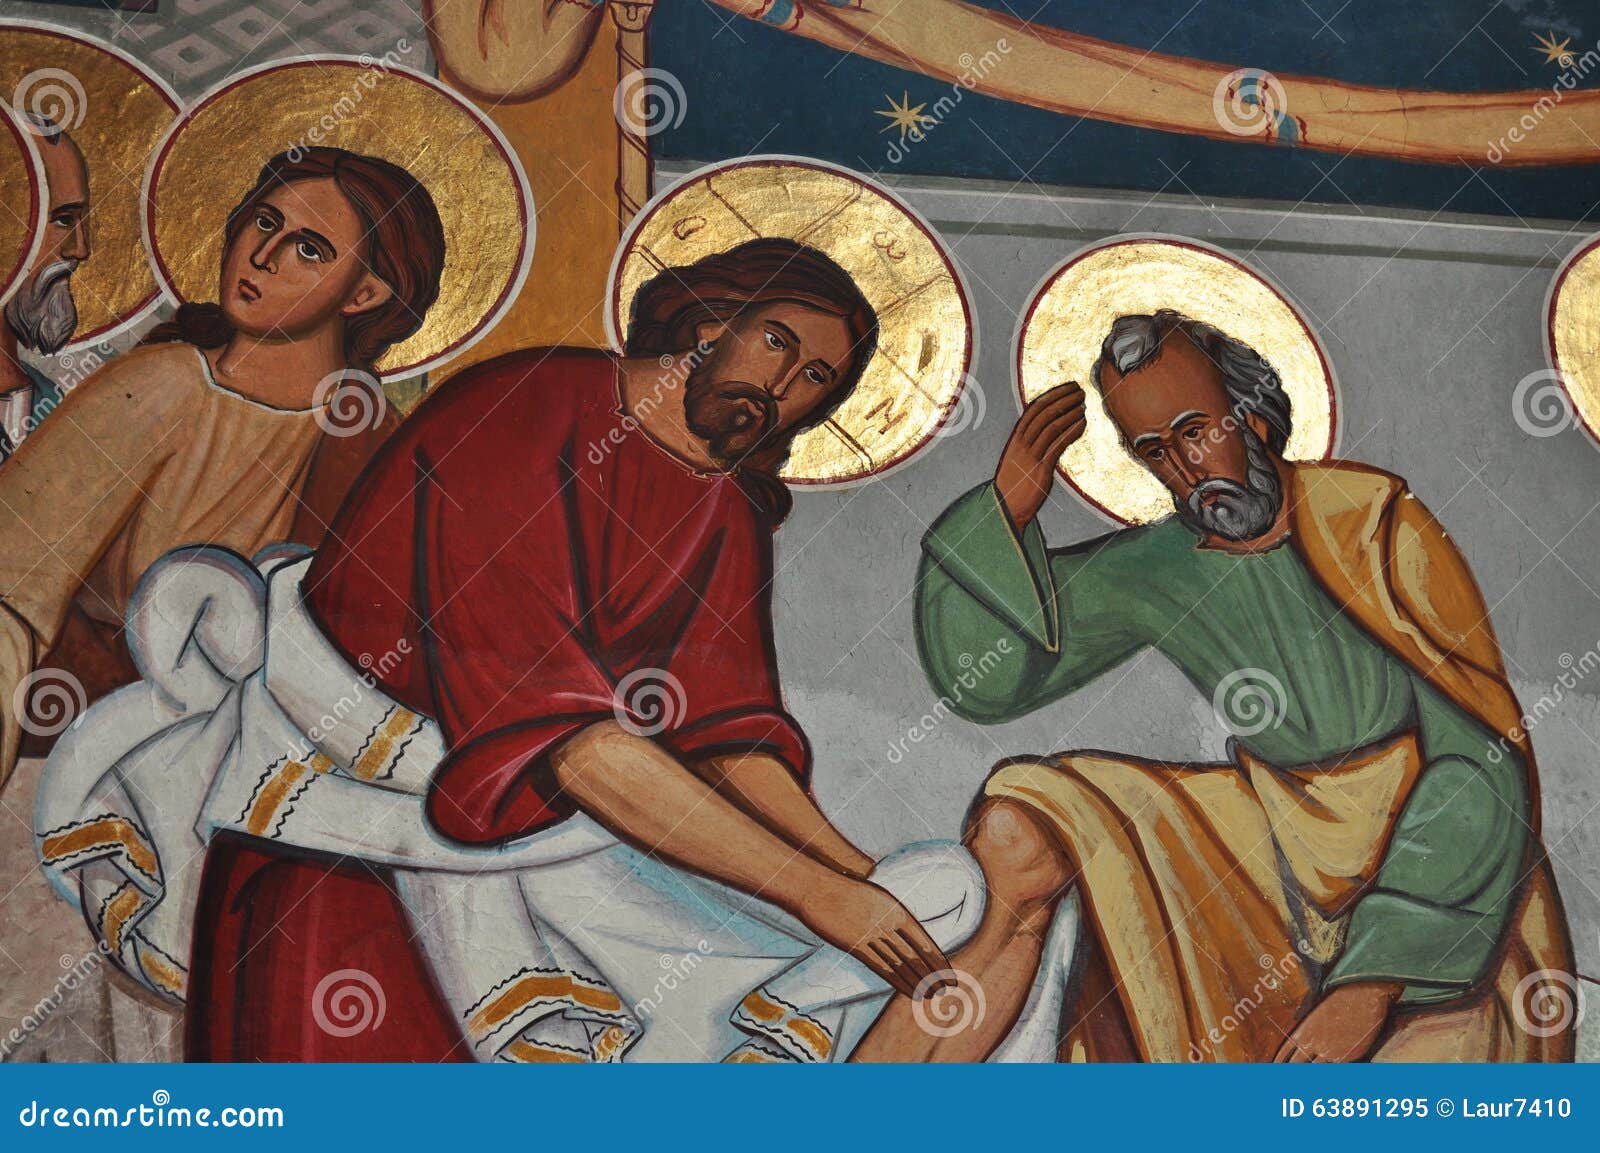 jesus washes his disciplesÃ¢â¬â¢ feet paintings